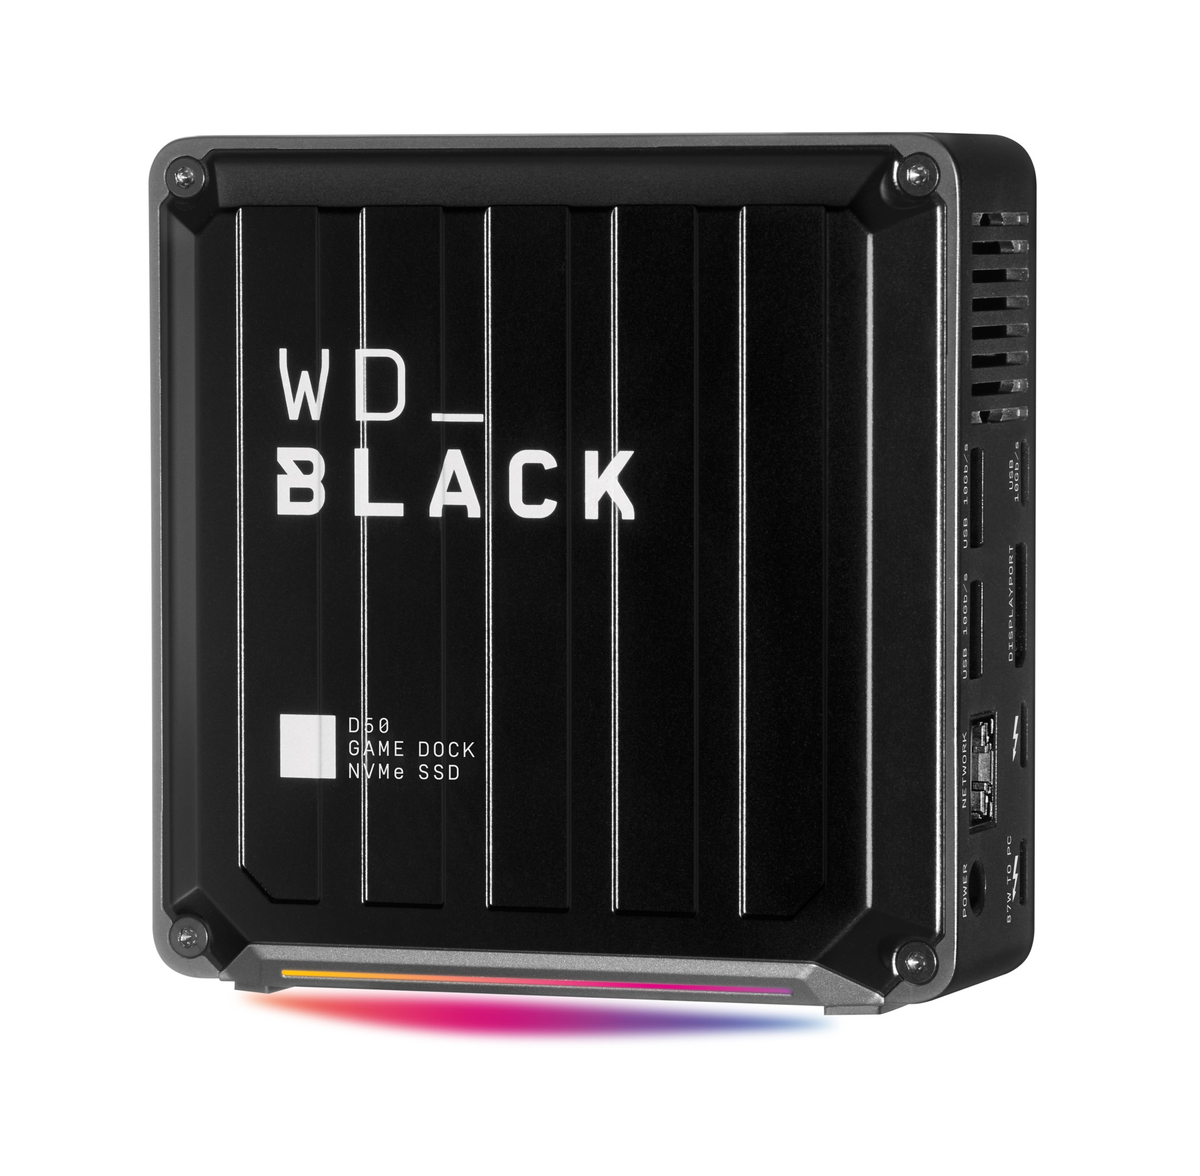 WD Black D50 Game Dock SSD